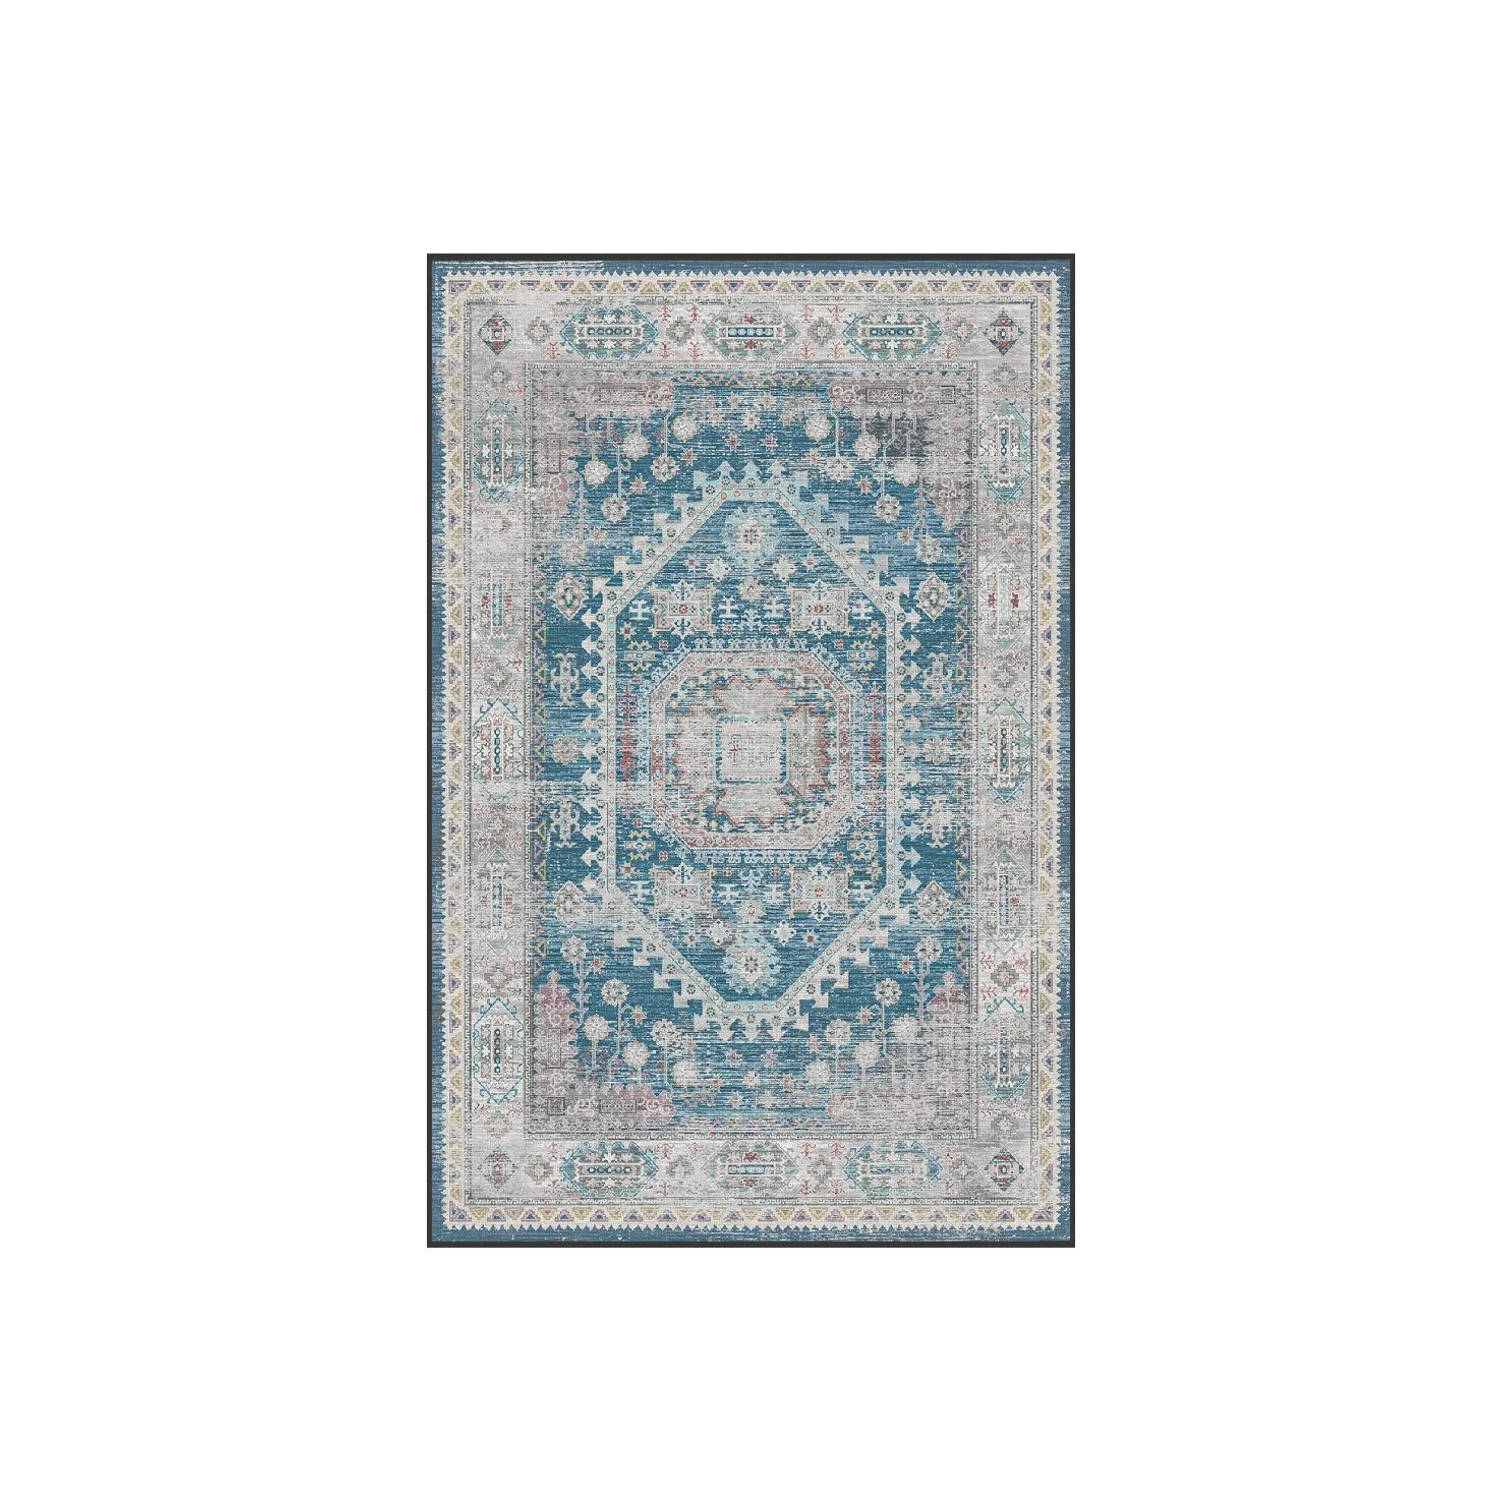 mannetje Kolonel Pool Vloerkleed vintage 200x350cm donkerblauw perzisch oosters tapijt | Blokker